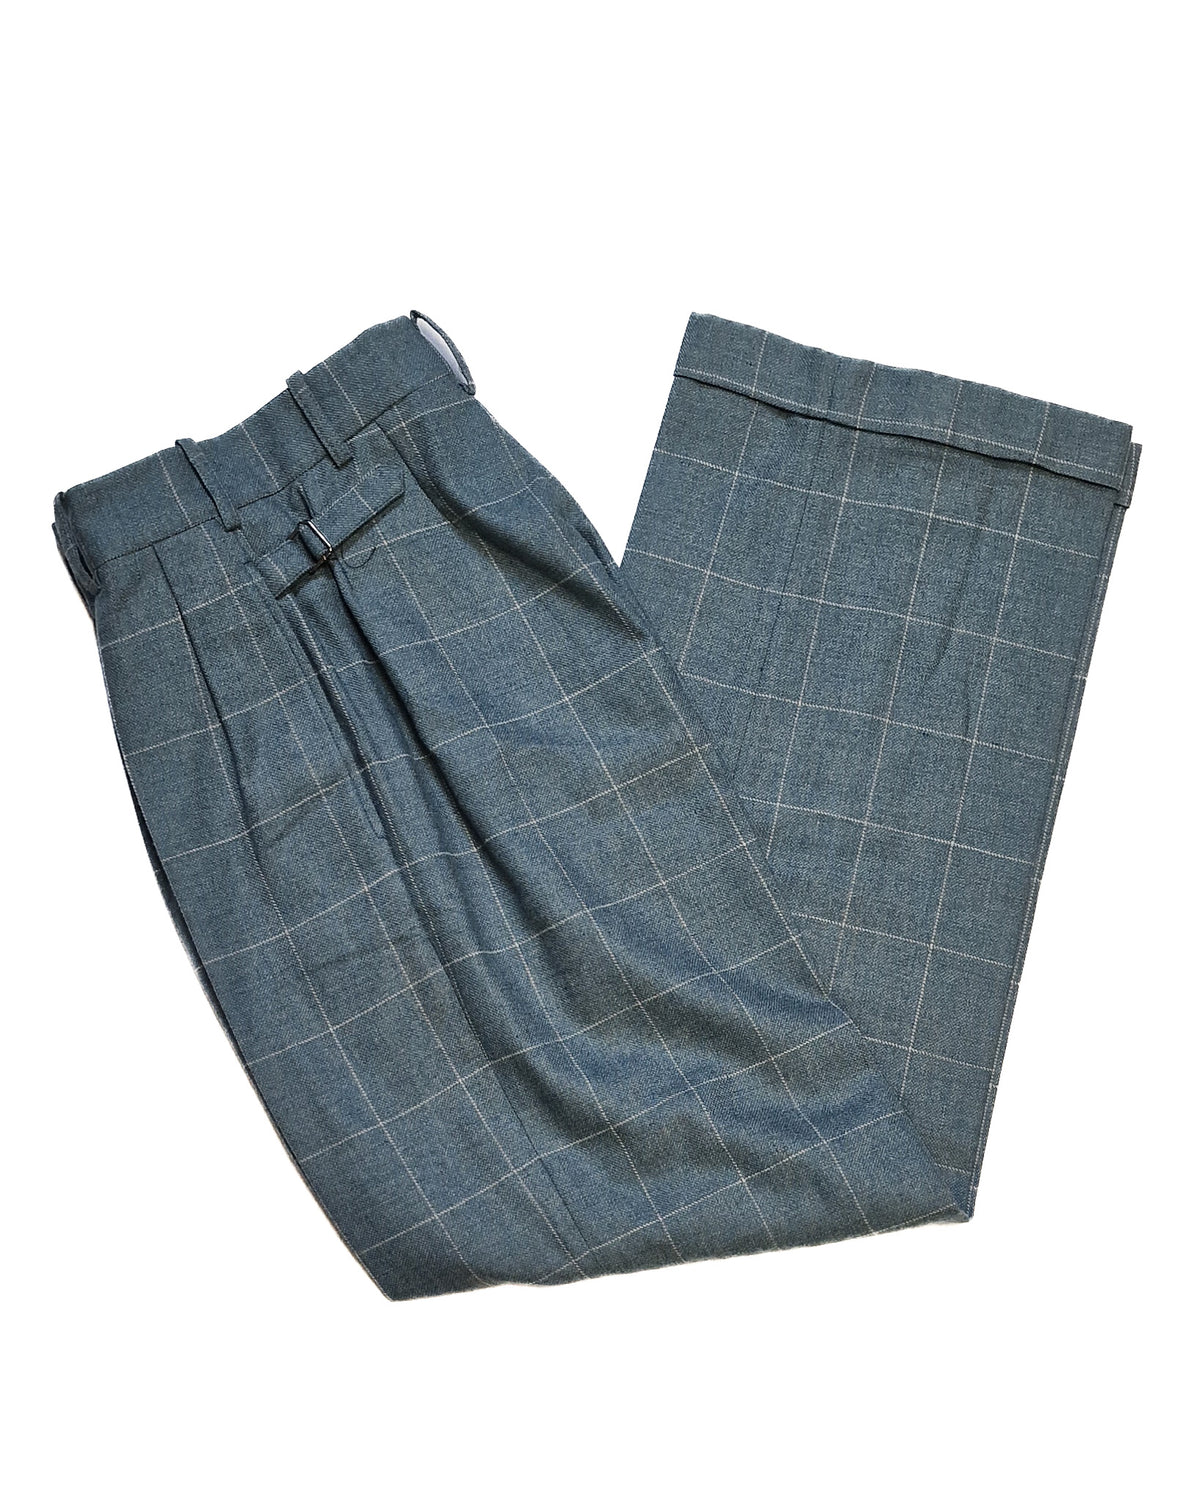 Sample Wool-Linen DB Suit Size 6